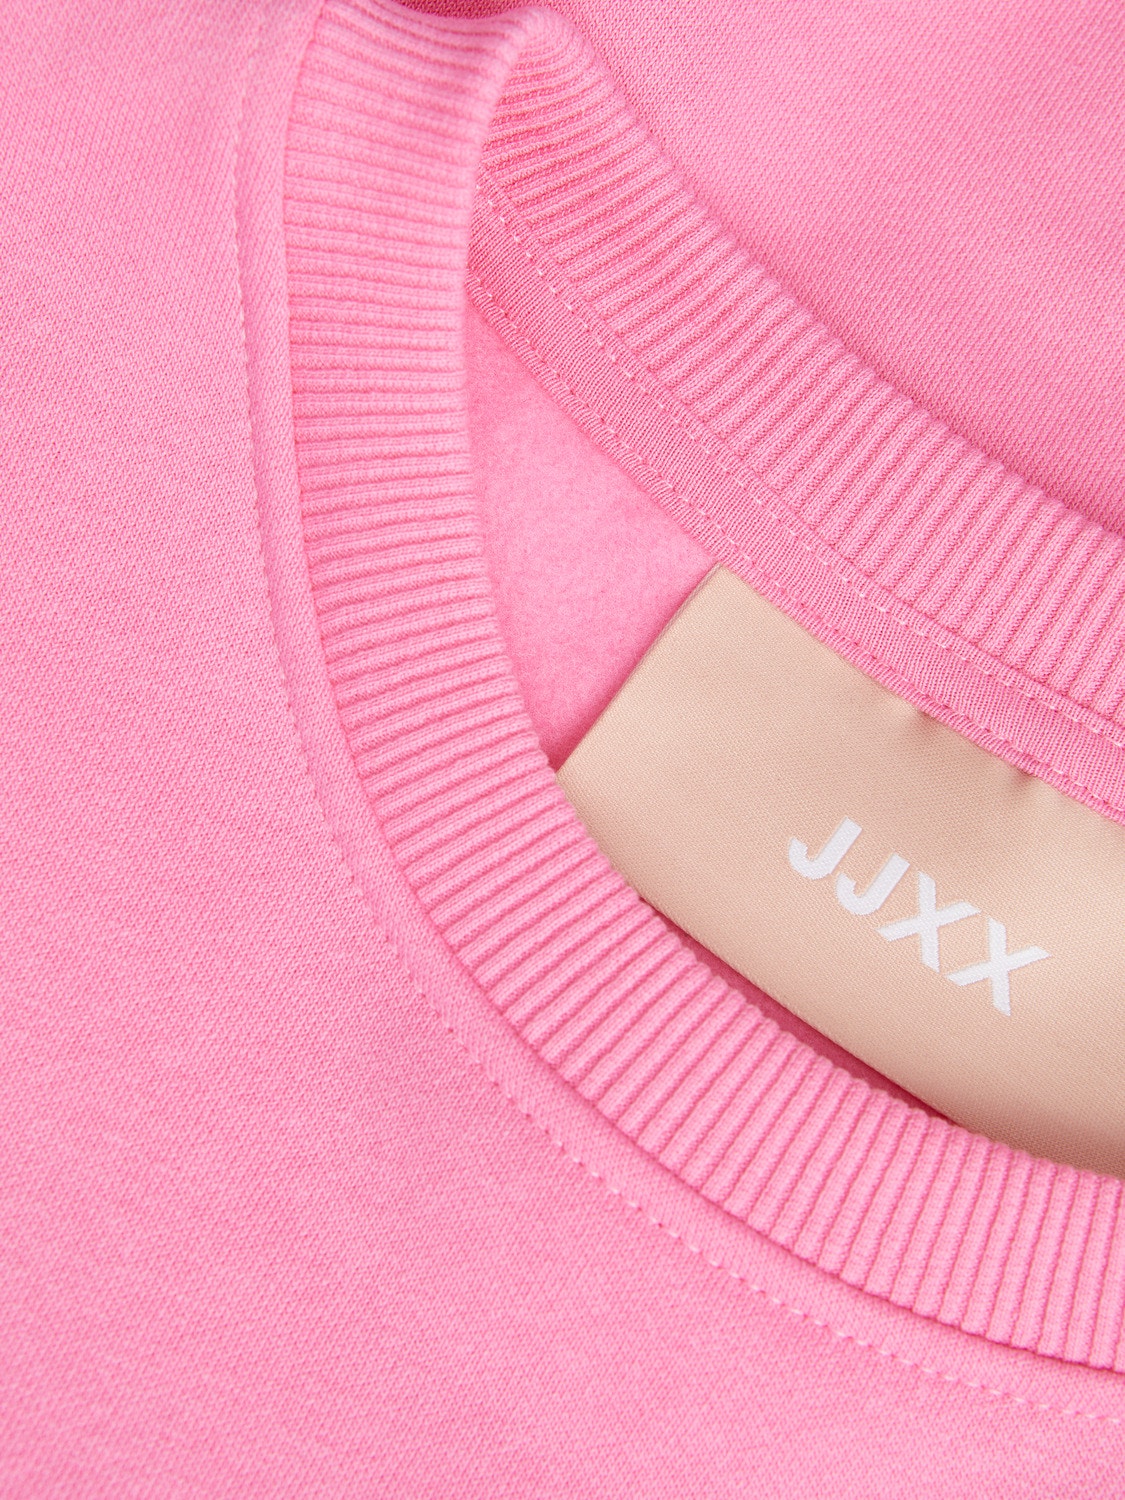 JJXX JXMAS Crew neck Sweatshirt -Aurora Pink - 12250198